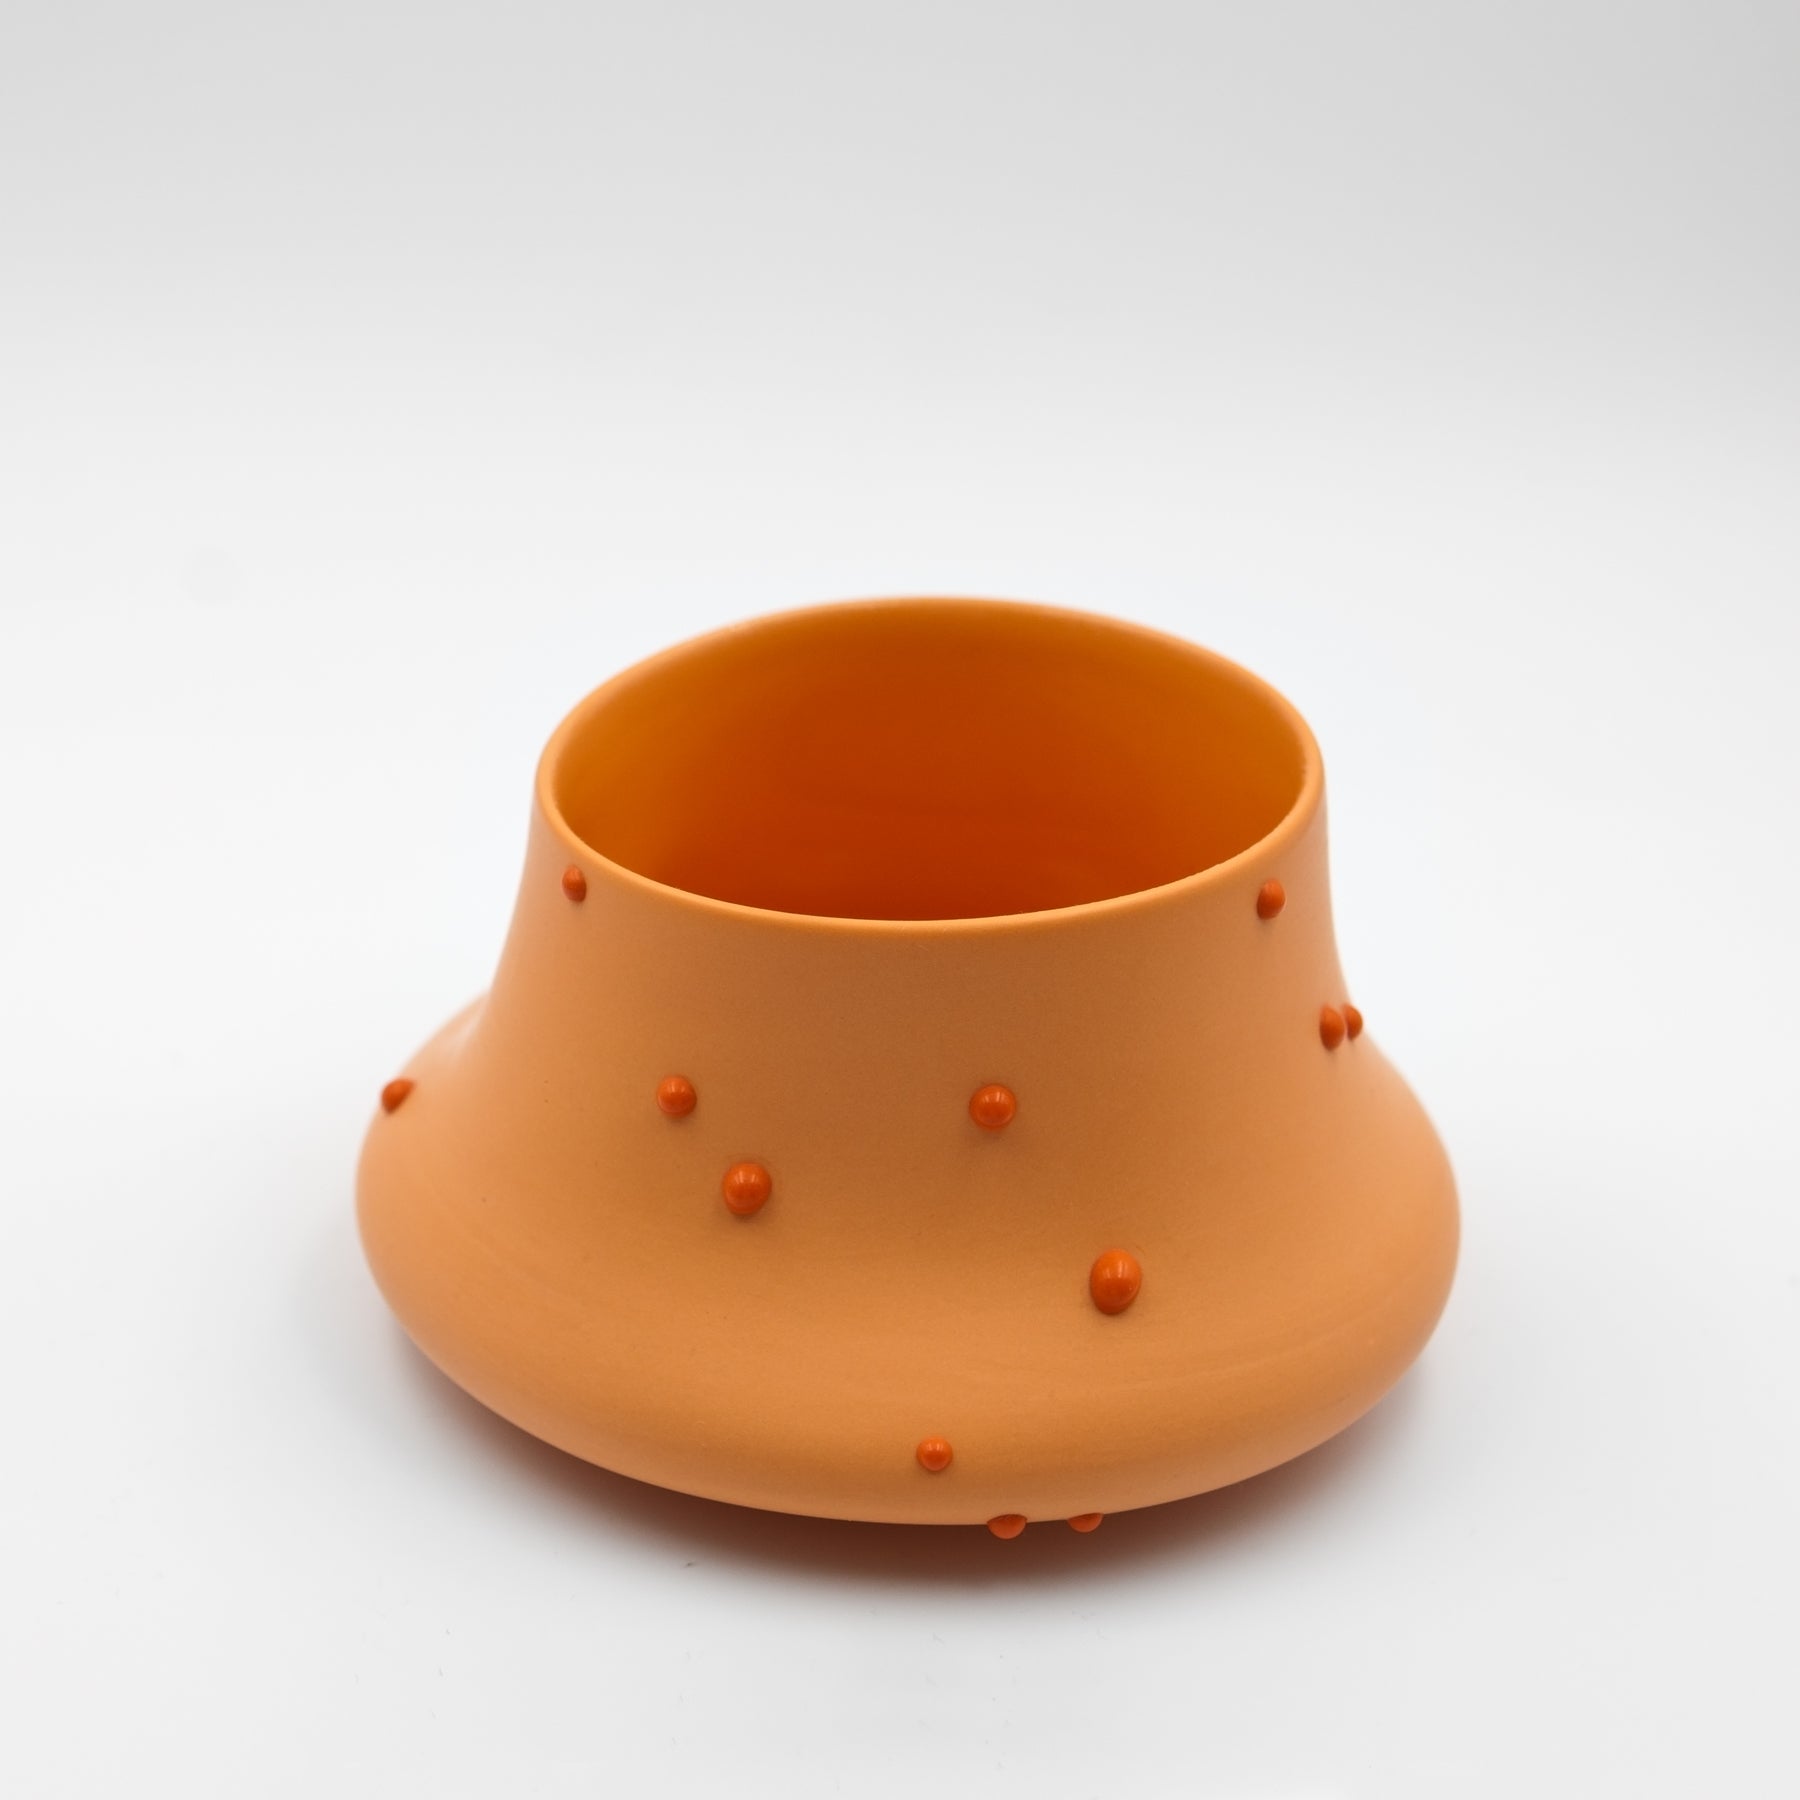 Peckii cup, double orange